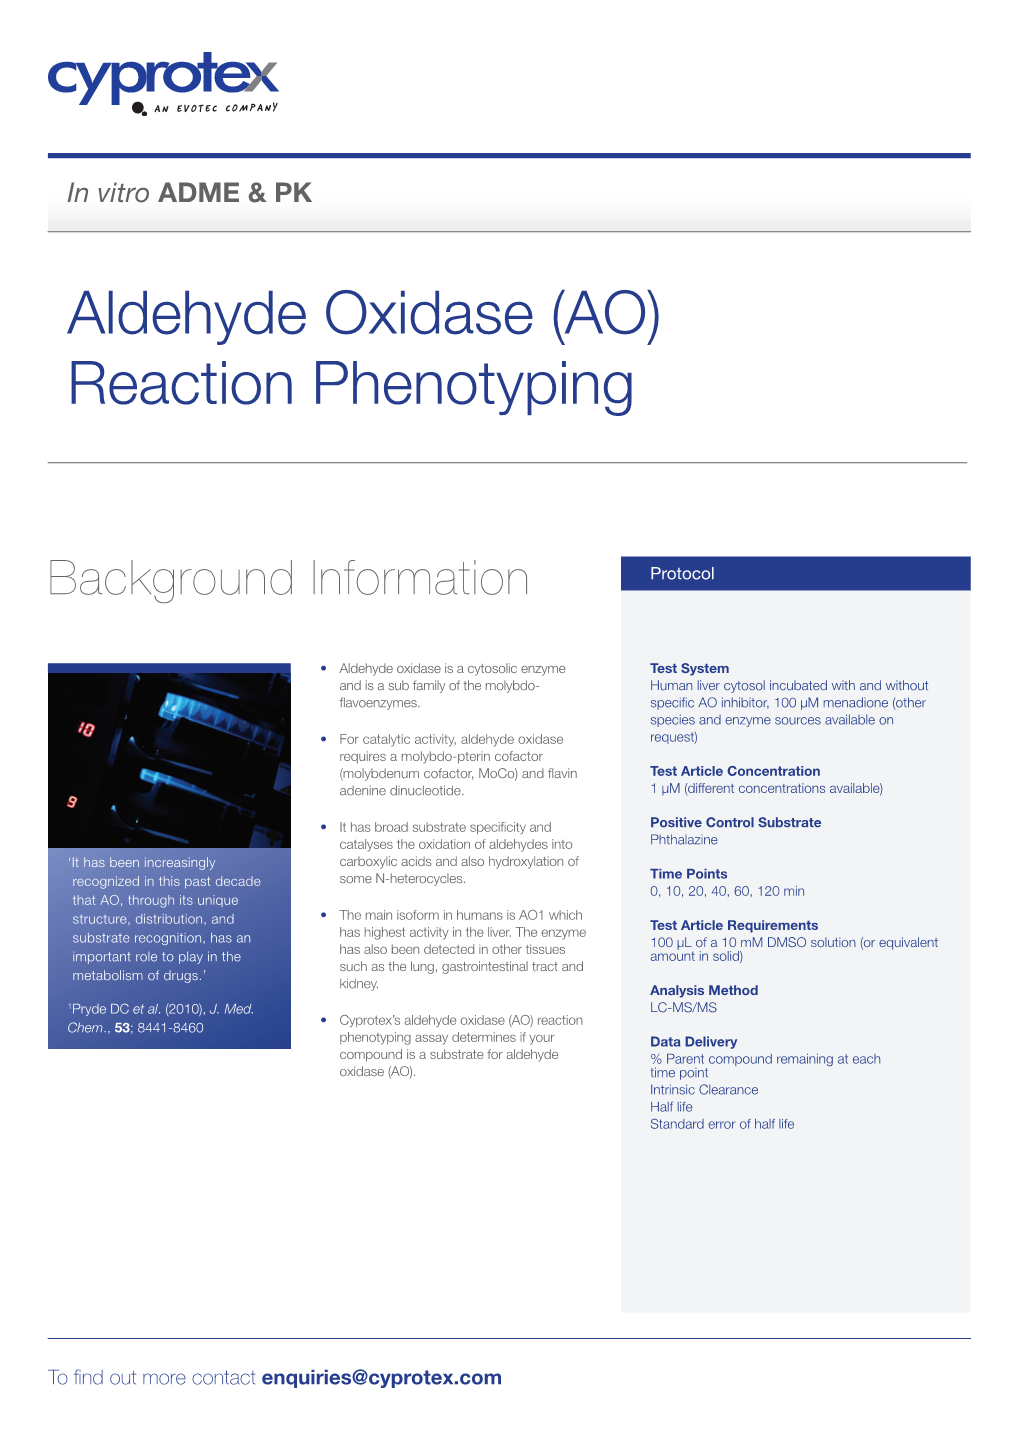 Aldehyde Oxidase Reaction Phenotyping